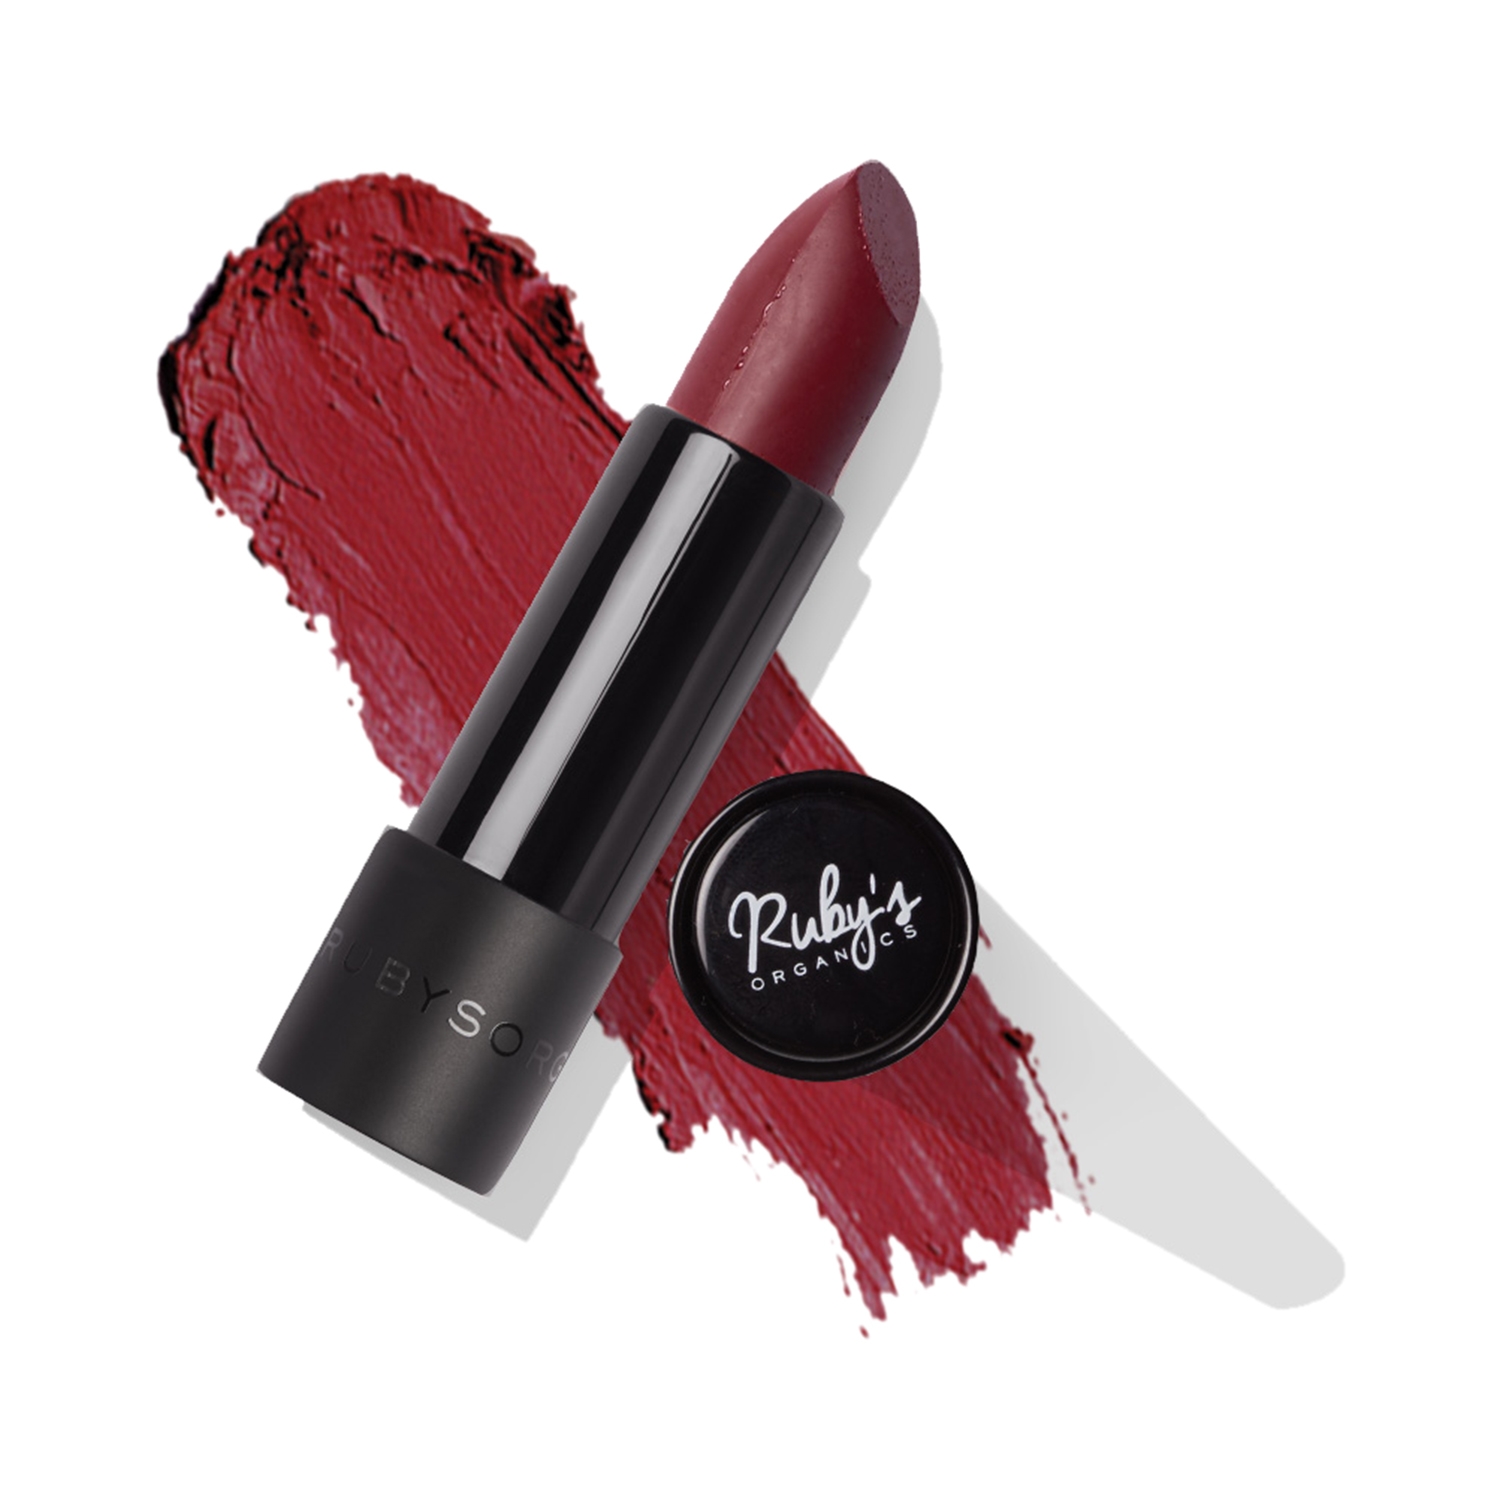 Ruby's Organics Lipstick - Burgundy (3.7g)